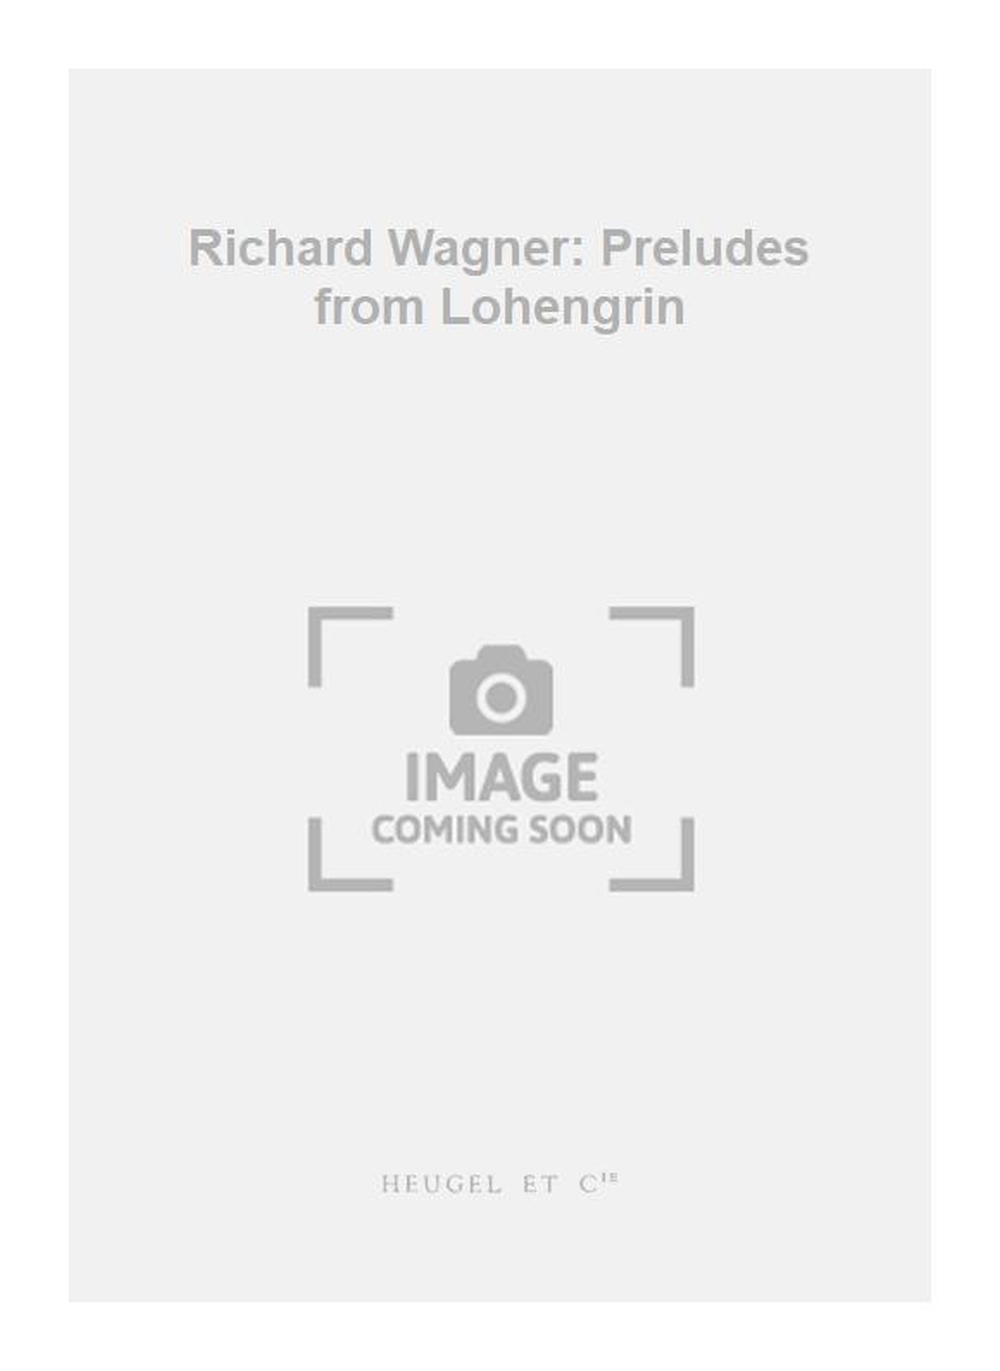 Richard Wagner: Richard Wagner: Preludes from Lohengrin